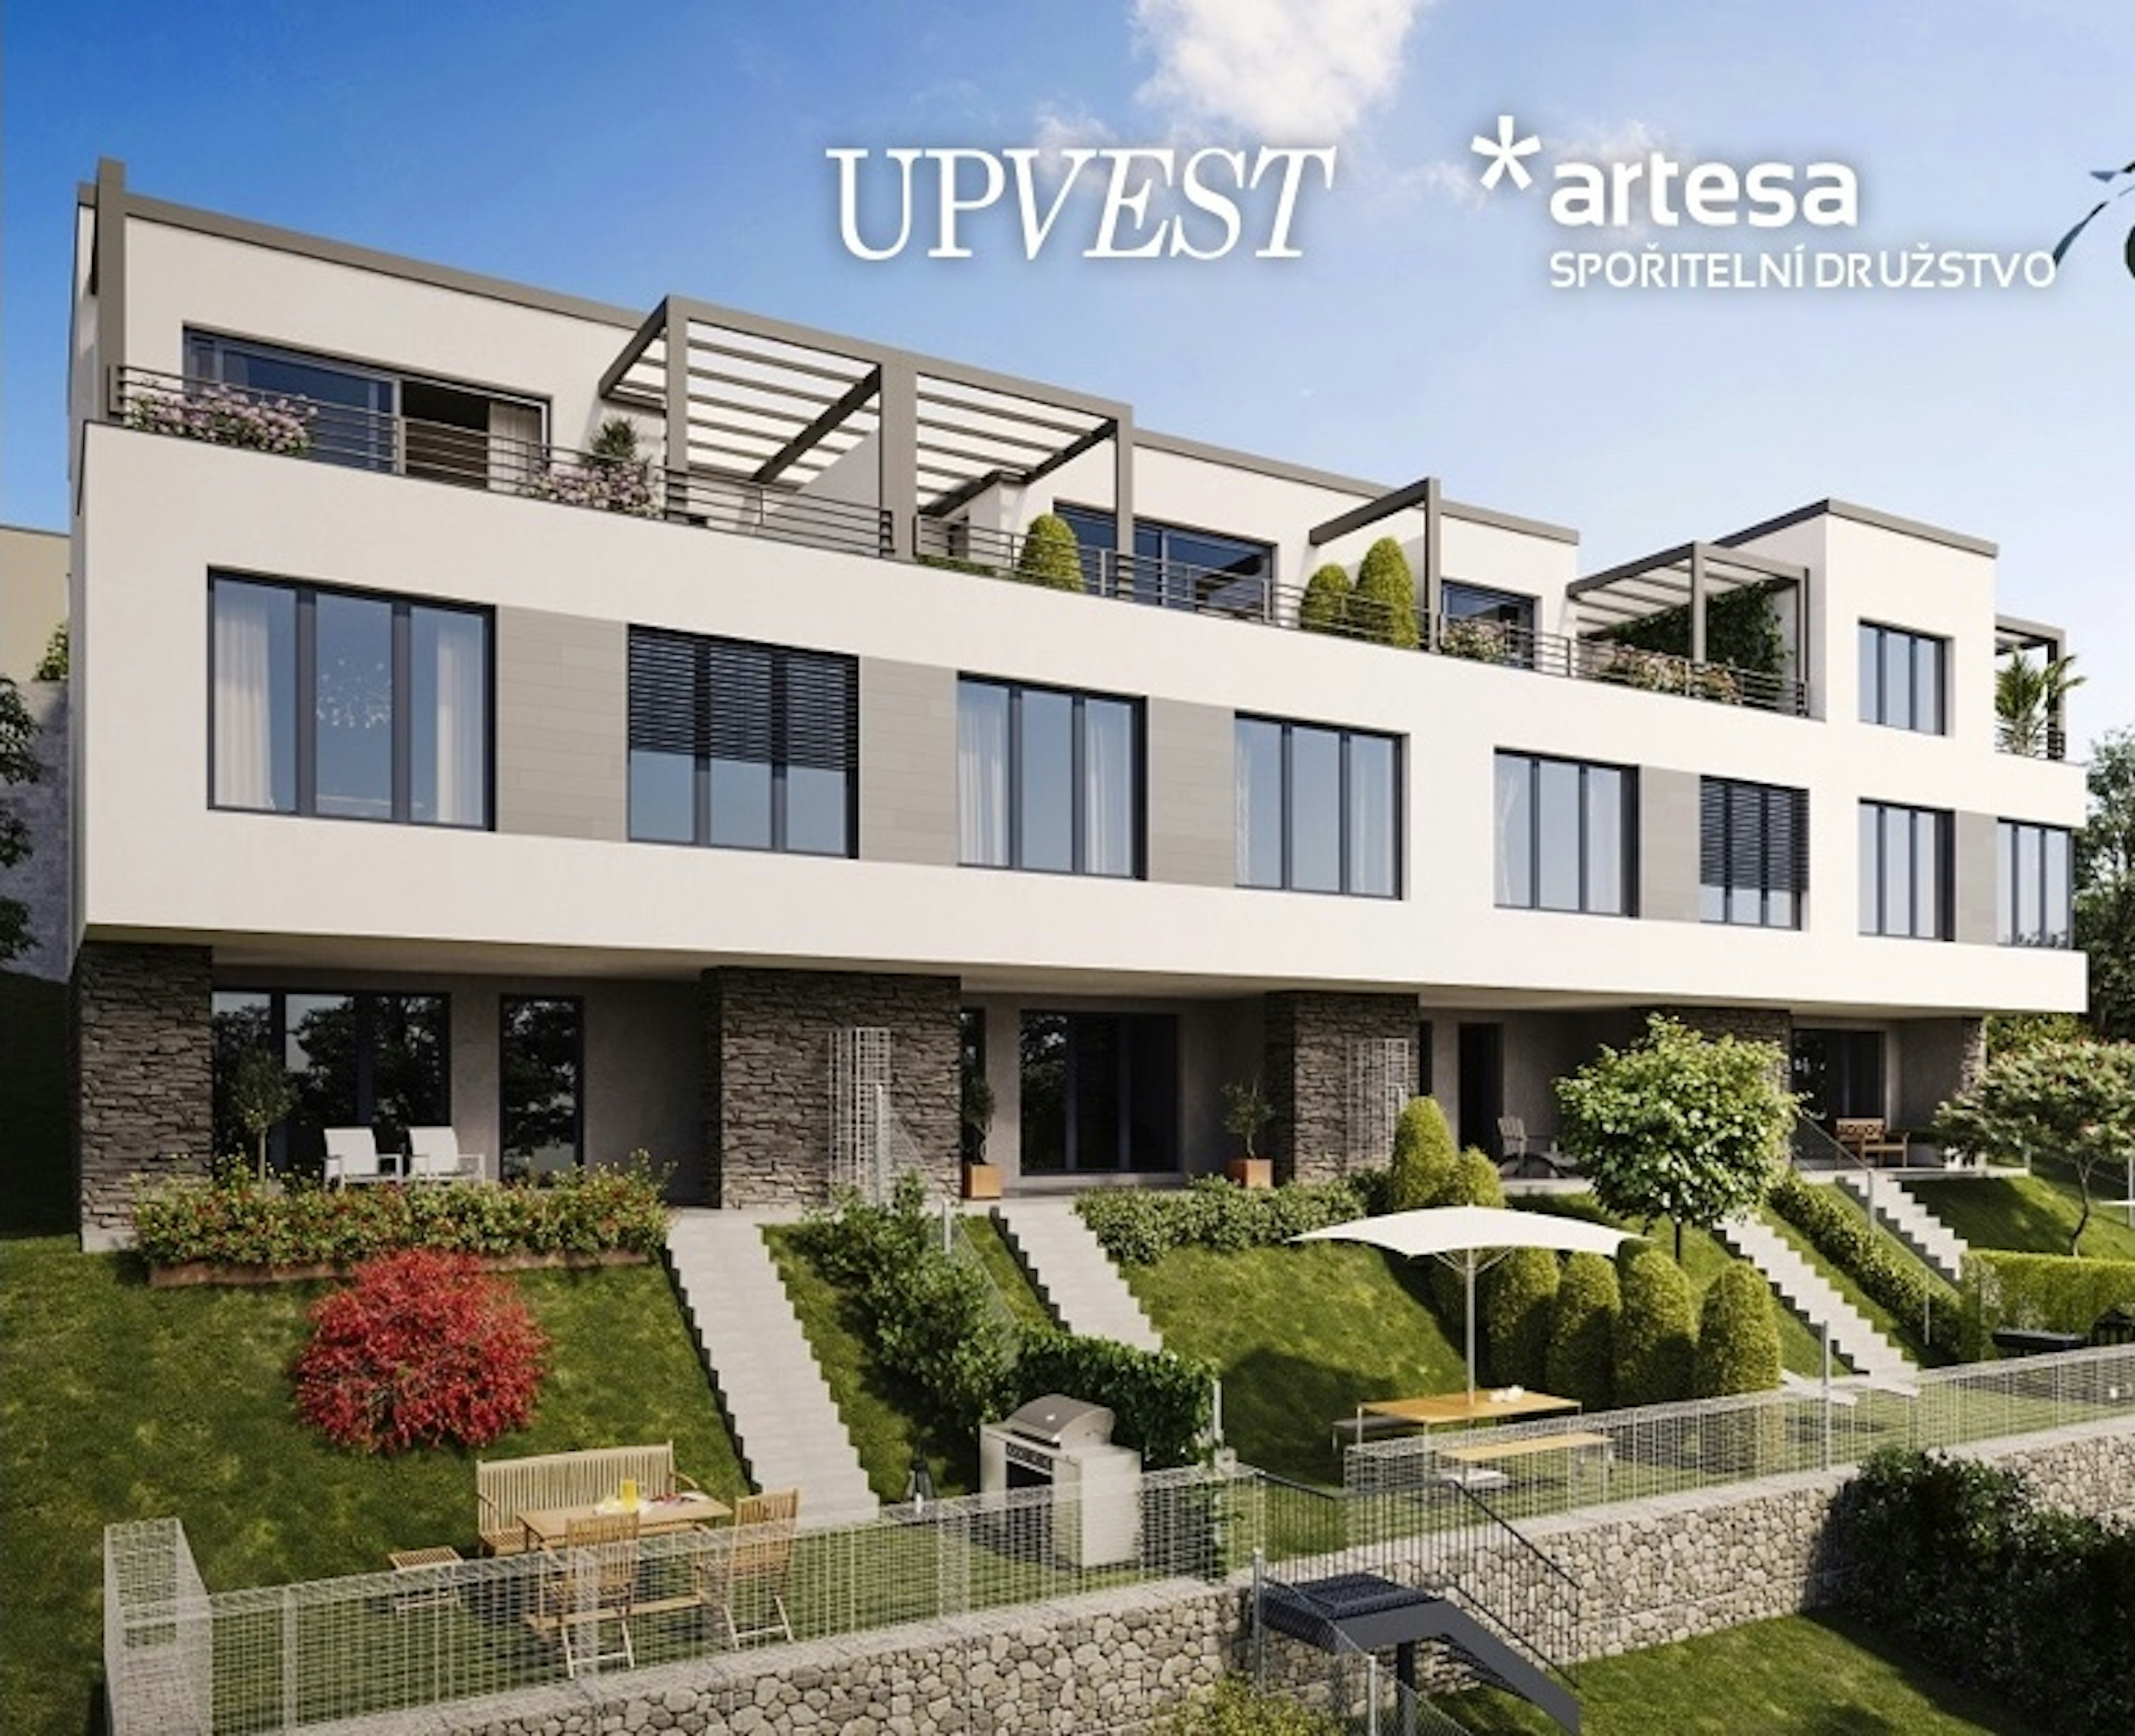 upvest-a-artesa-post-cover